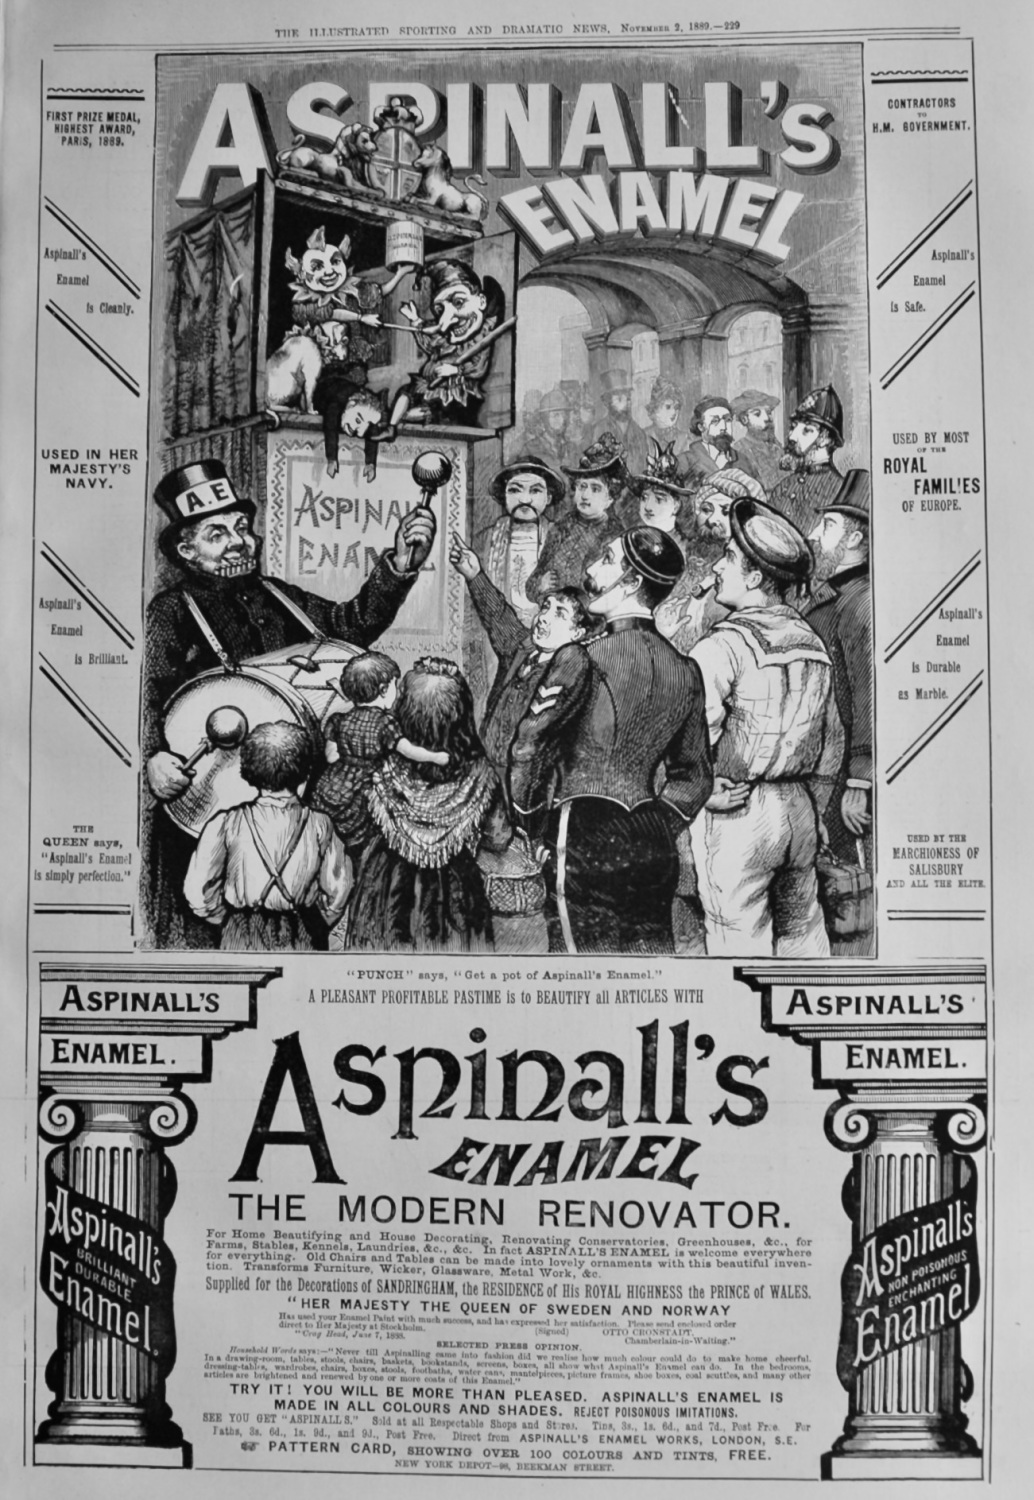 Aspinall's Enamel.  1889.